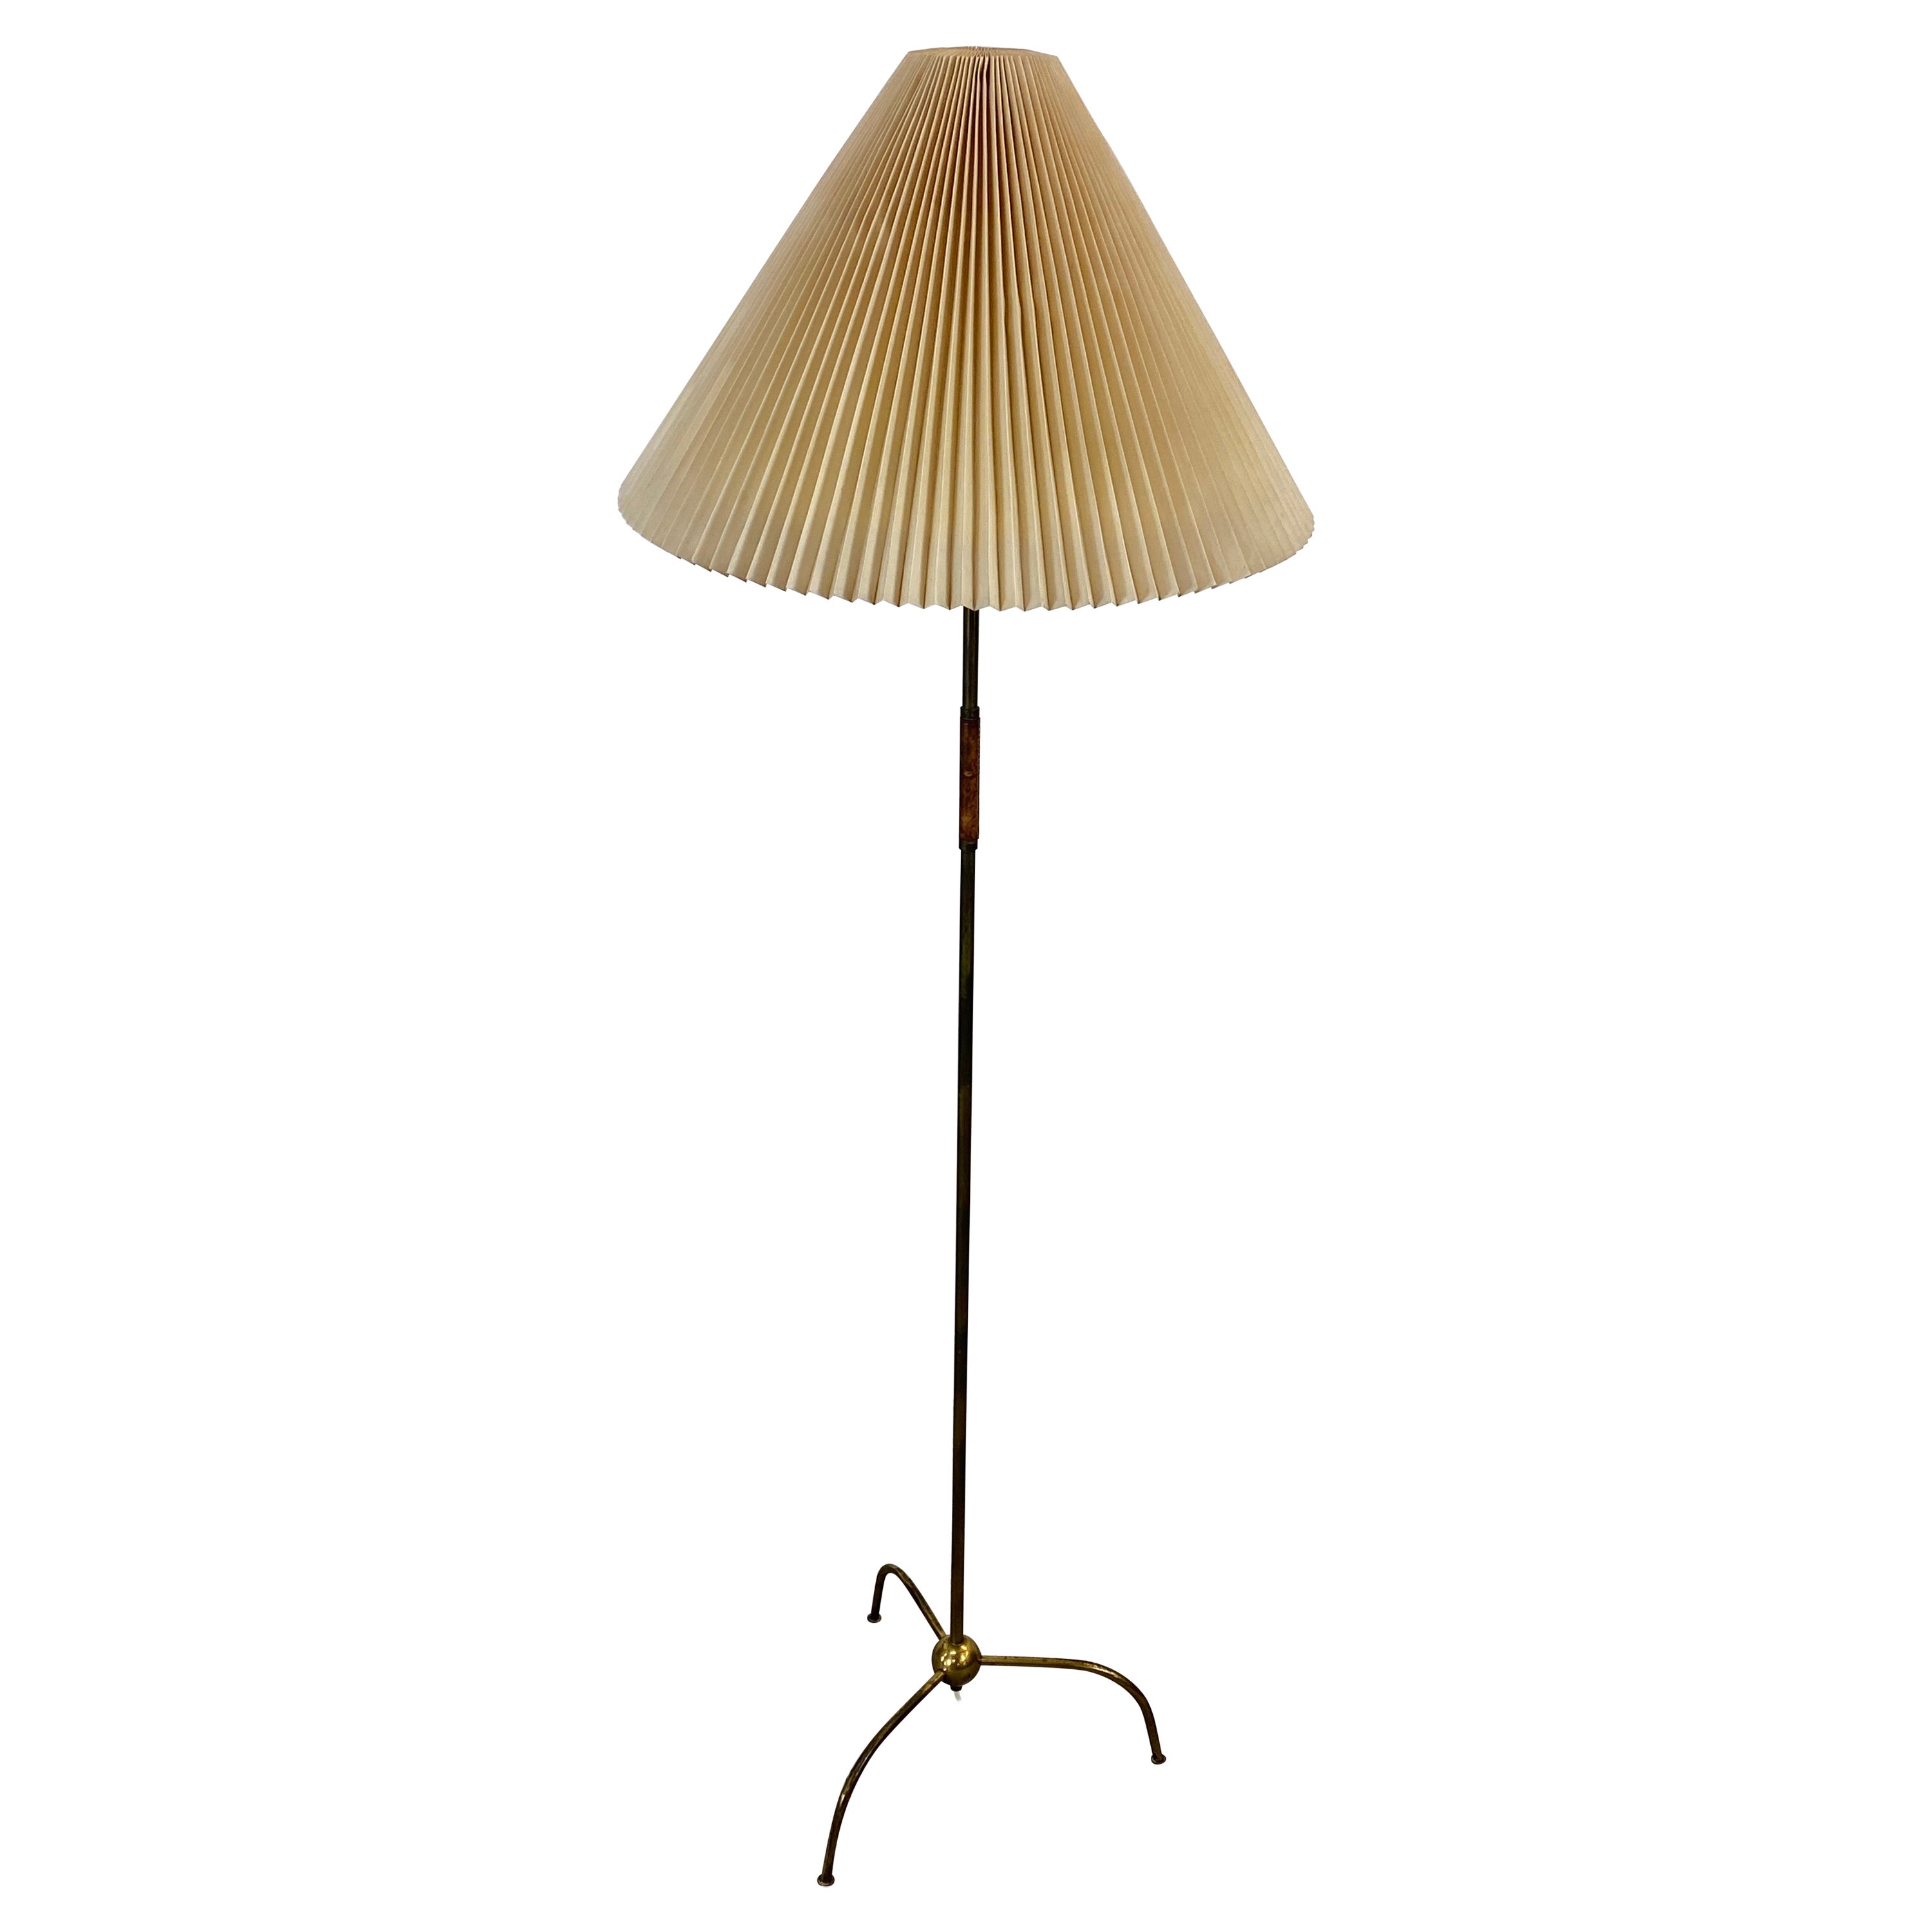 Tripod Midcentury Floor Brass lamp from Josef Frank by Kalmar, Austria 1940s For Sale